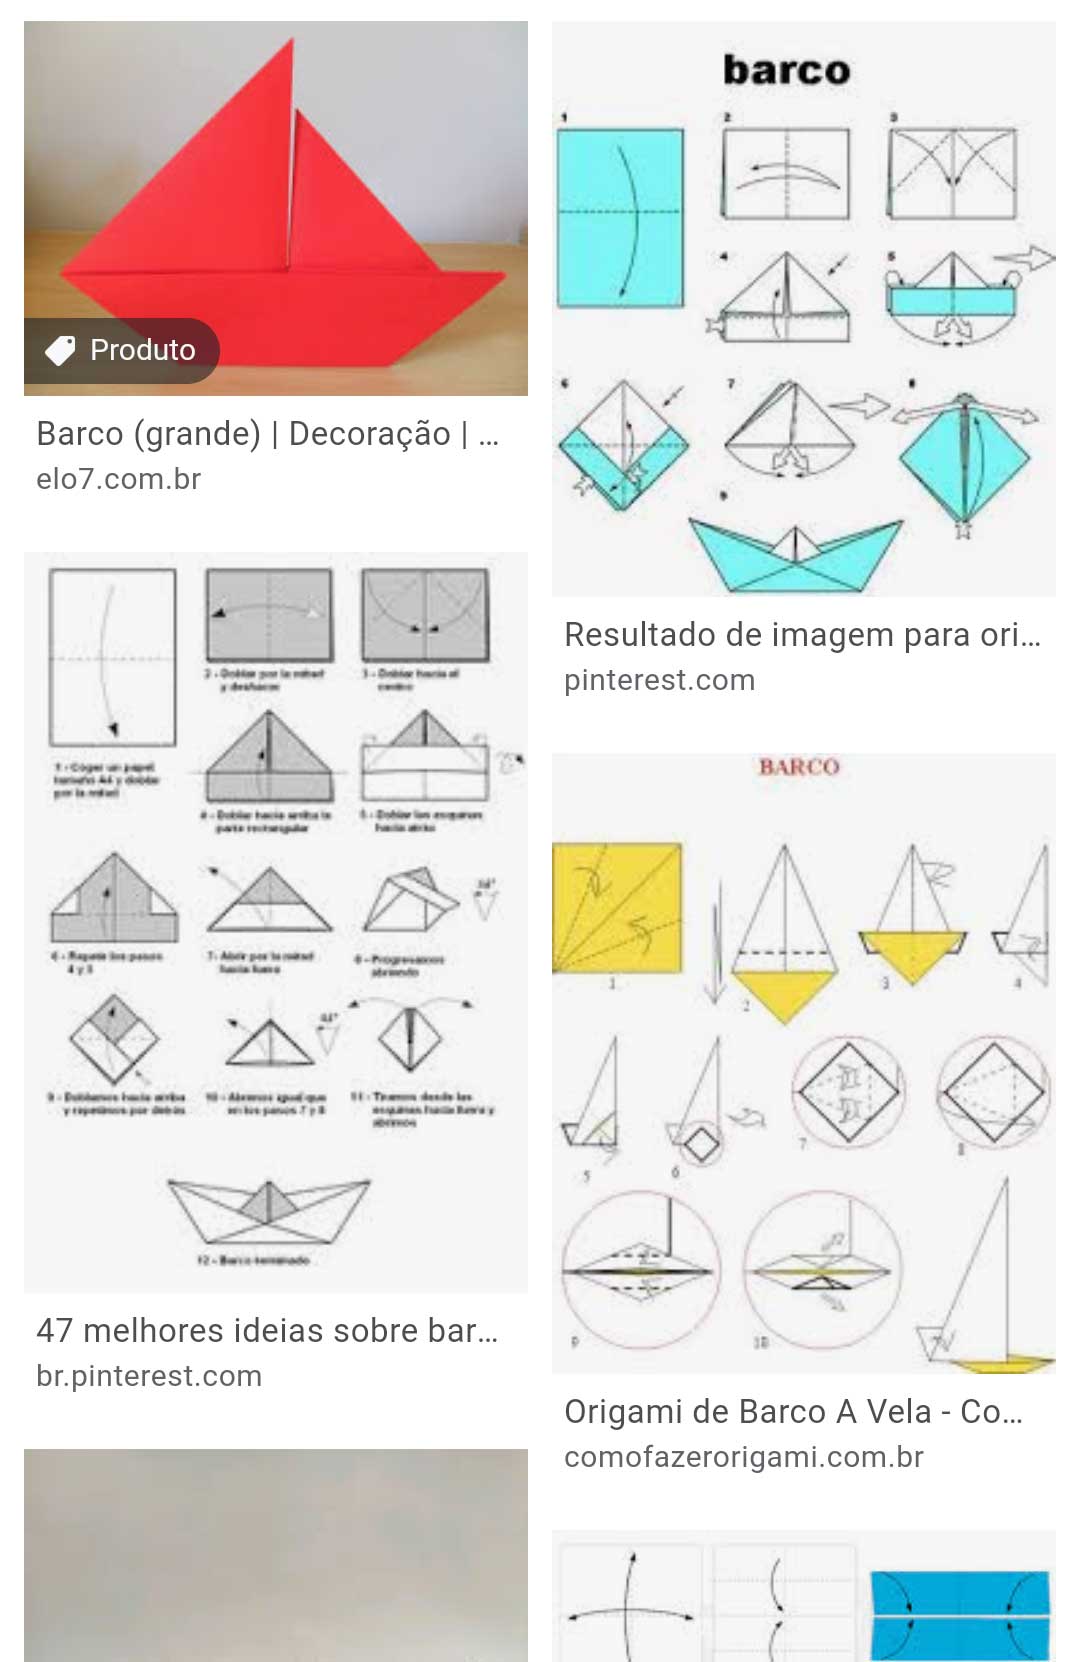 exemplo de barco de origami no google images